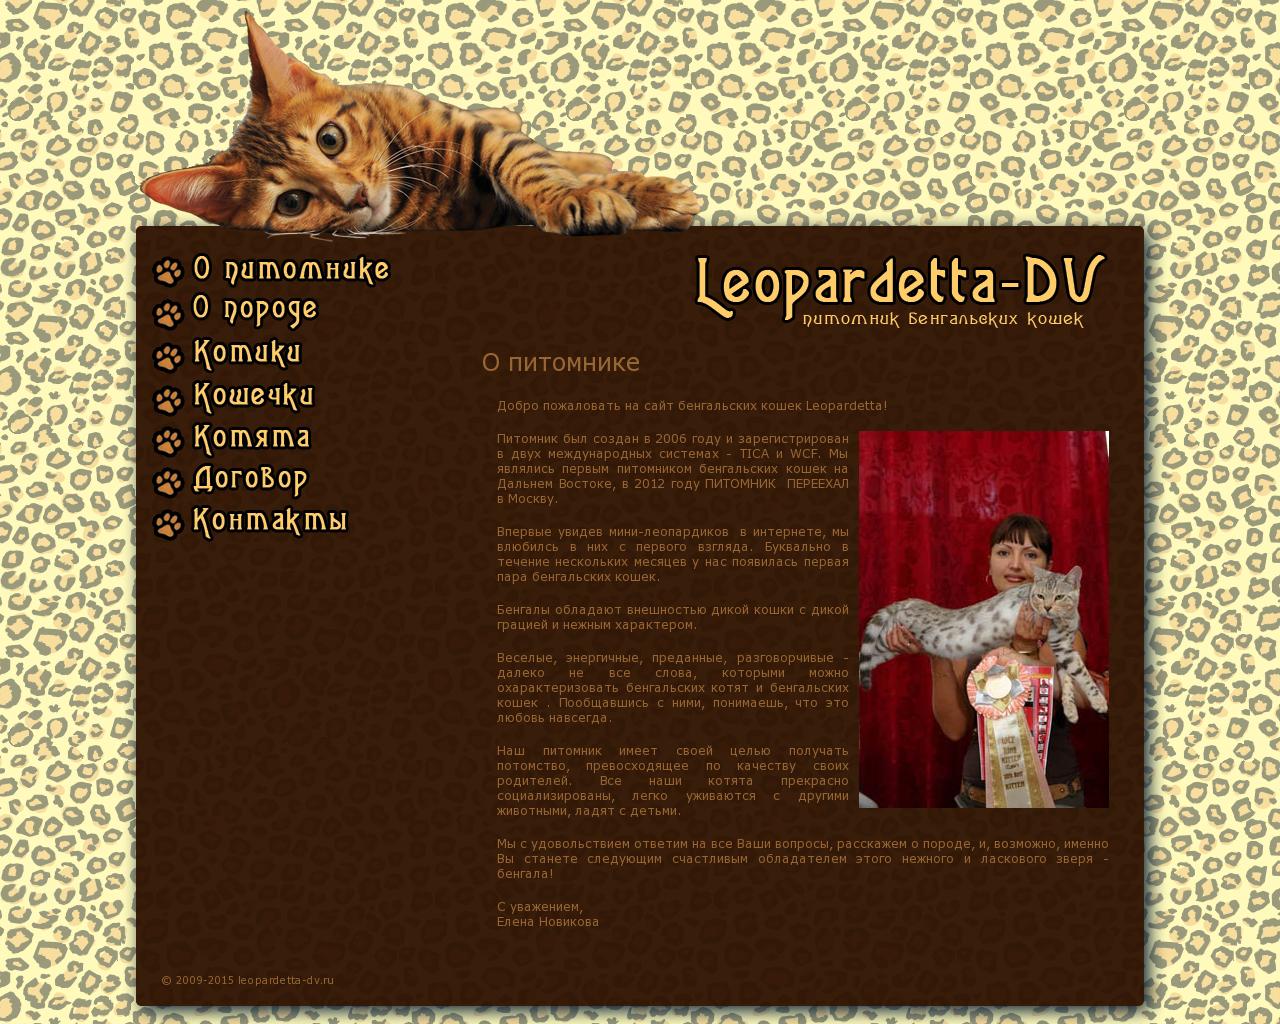 Изображение сайта leopardetta-dv.ru в разрешении 1280x1024